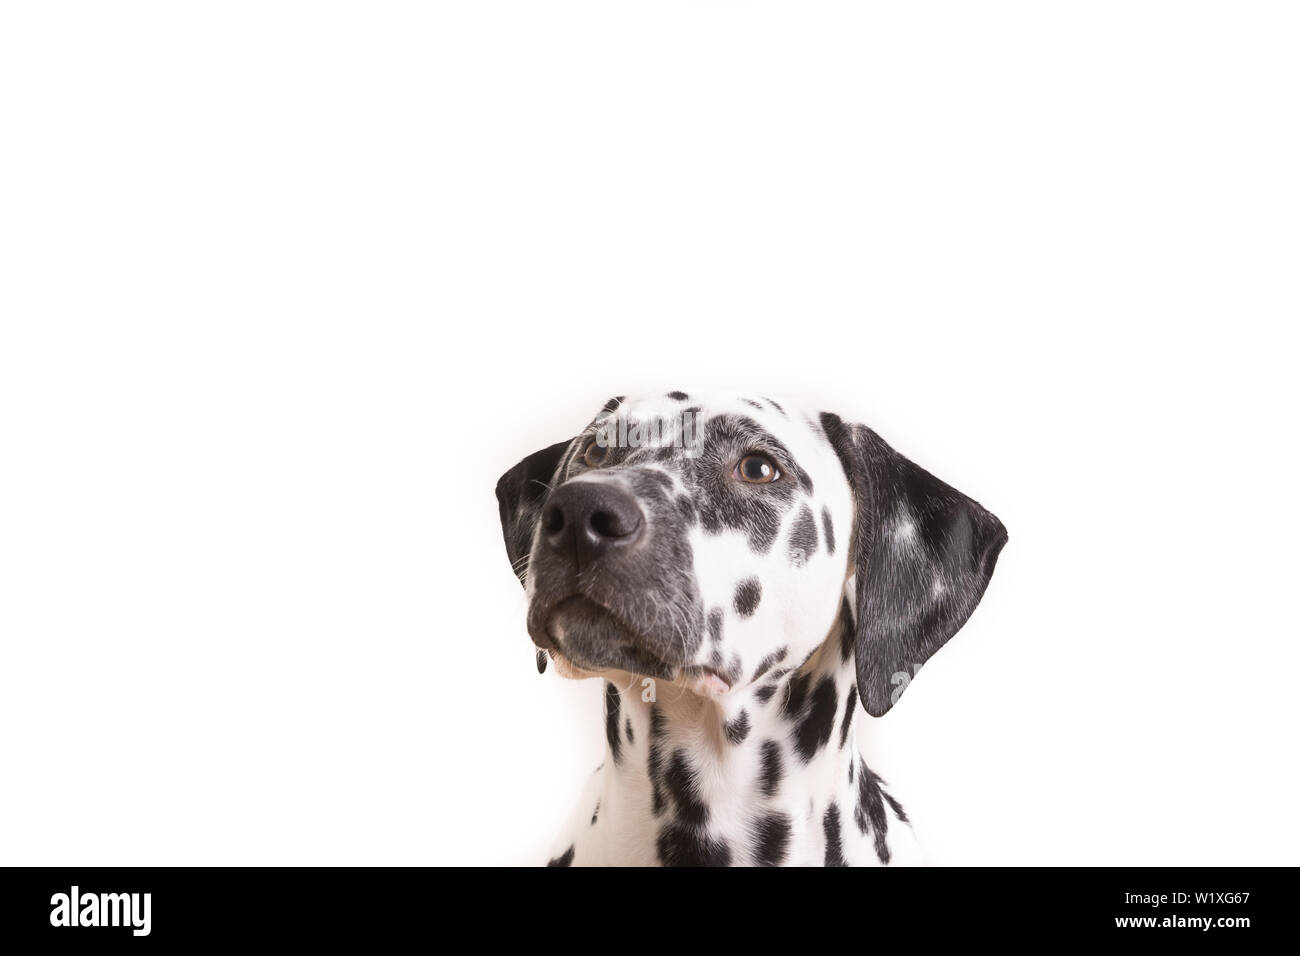 Headshot of a young Dalmatian dog isolated on white background Stock Photo